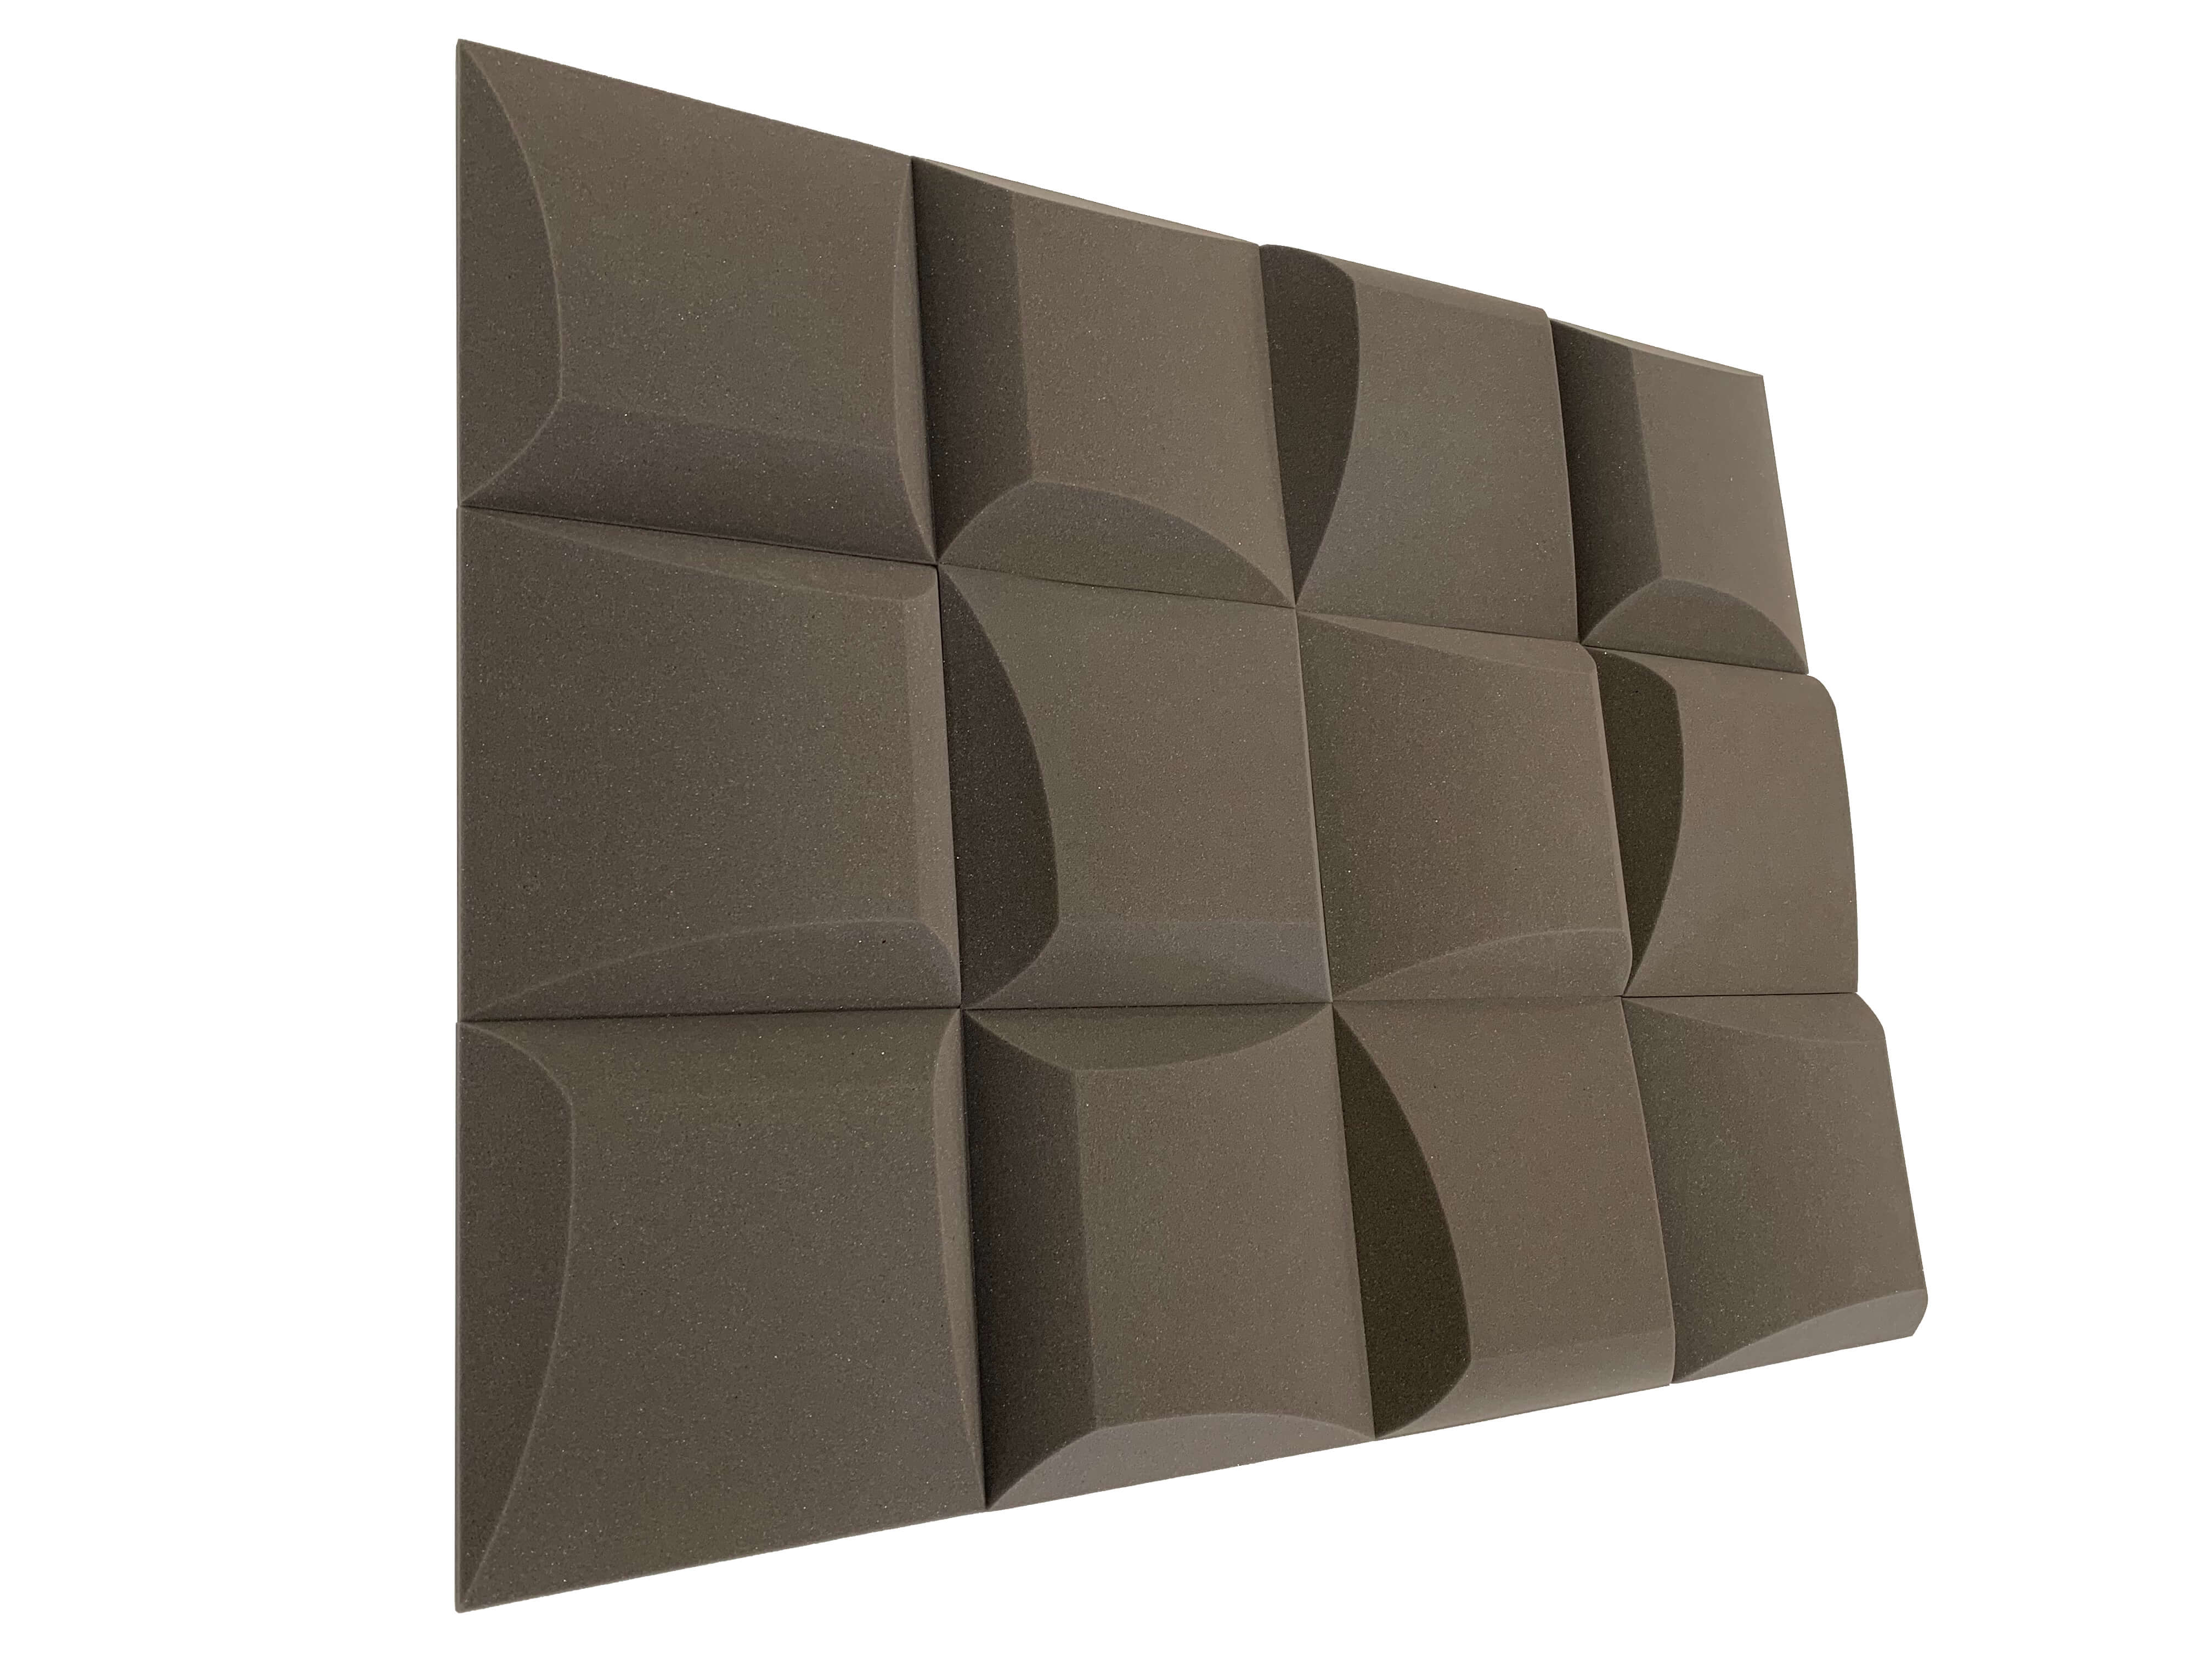 AeroFoil 12" Acoustic Studio Foam Tile Pack